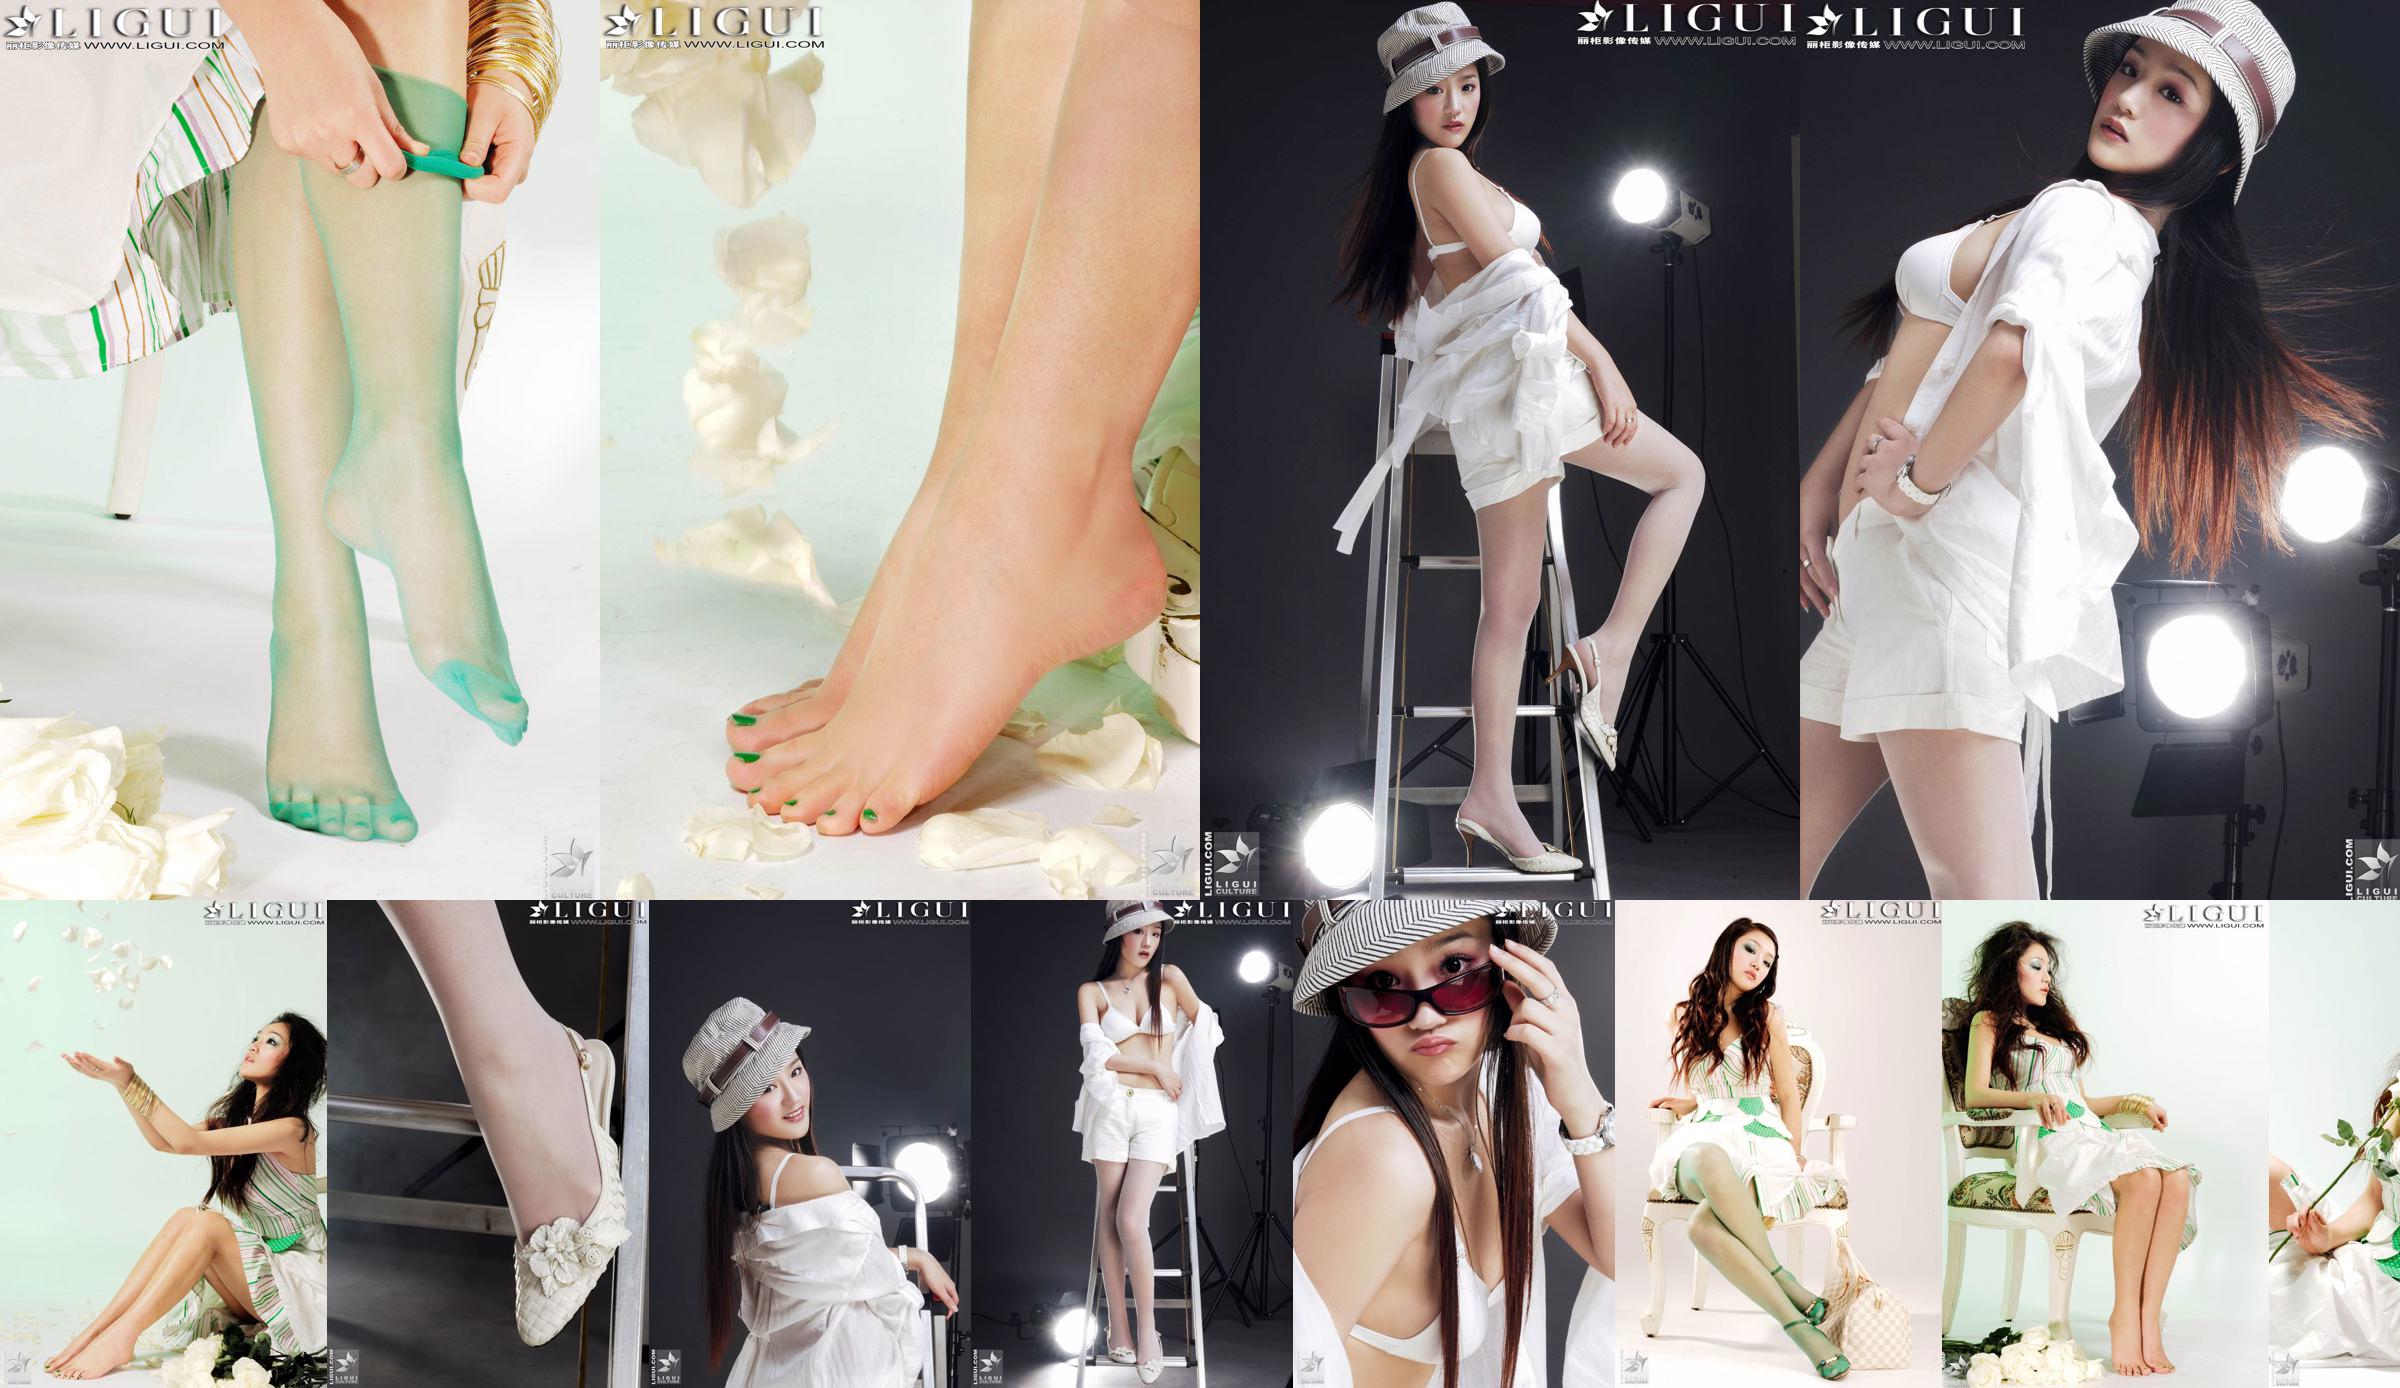 [丽 柜 贵 pé LiGui] Foto "Fashionable Foot" do modelo Zhang Jingyan de belas pernas e pés de seda No.dd66e6 Página 13